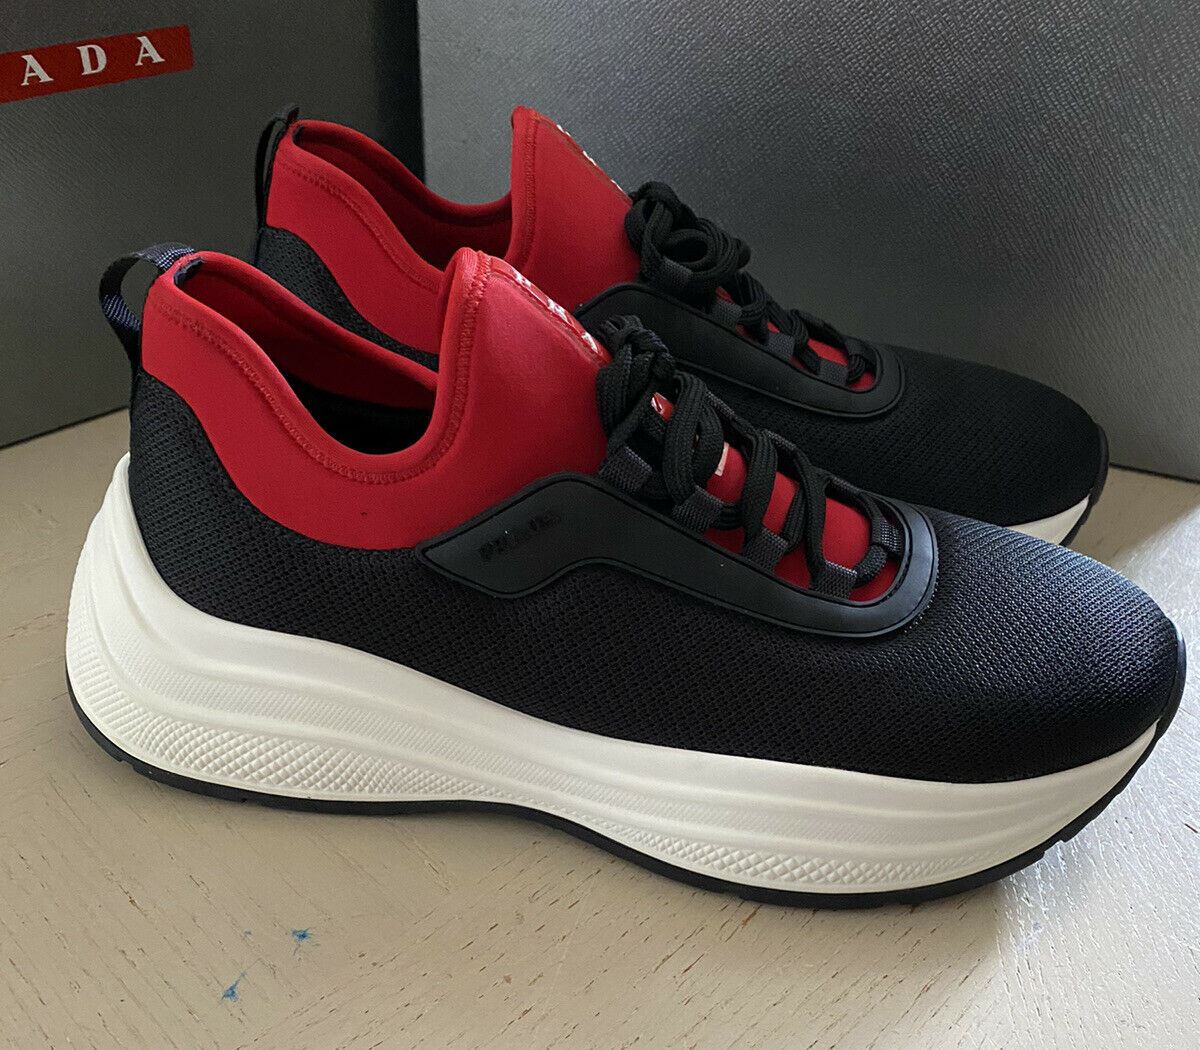 New $750 PRADA Men  Rete Neoprene Sneaker Shoes Red/Black 8.5 US/41.5 Eu Italy